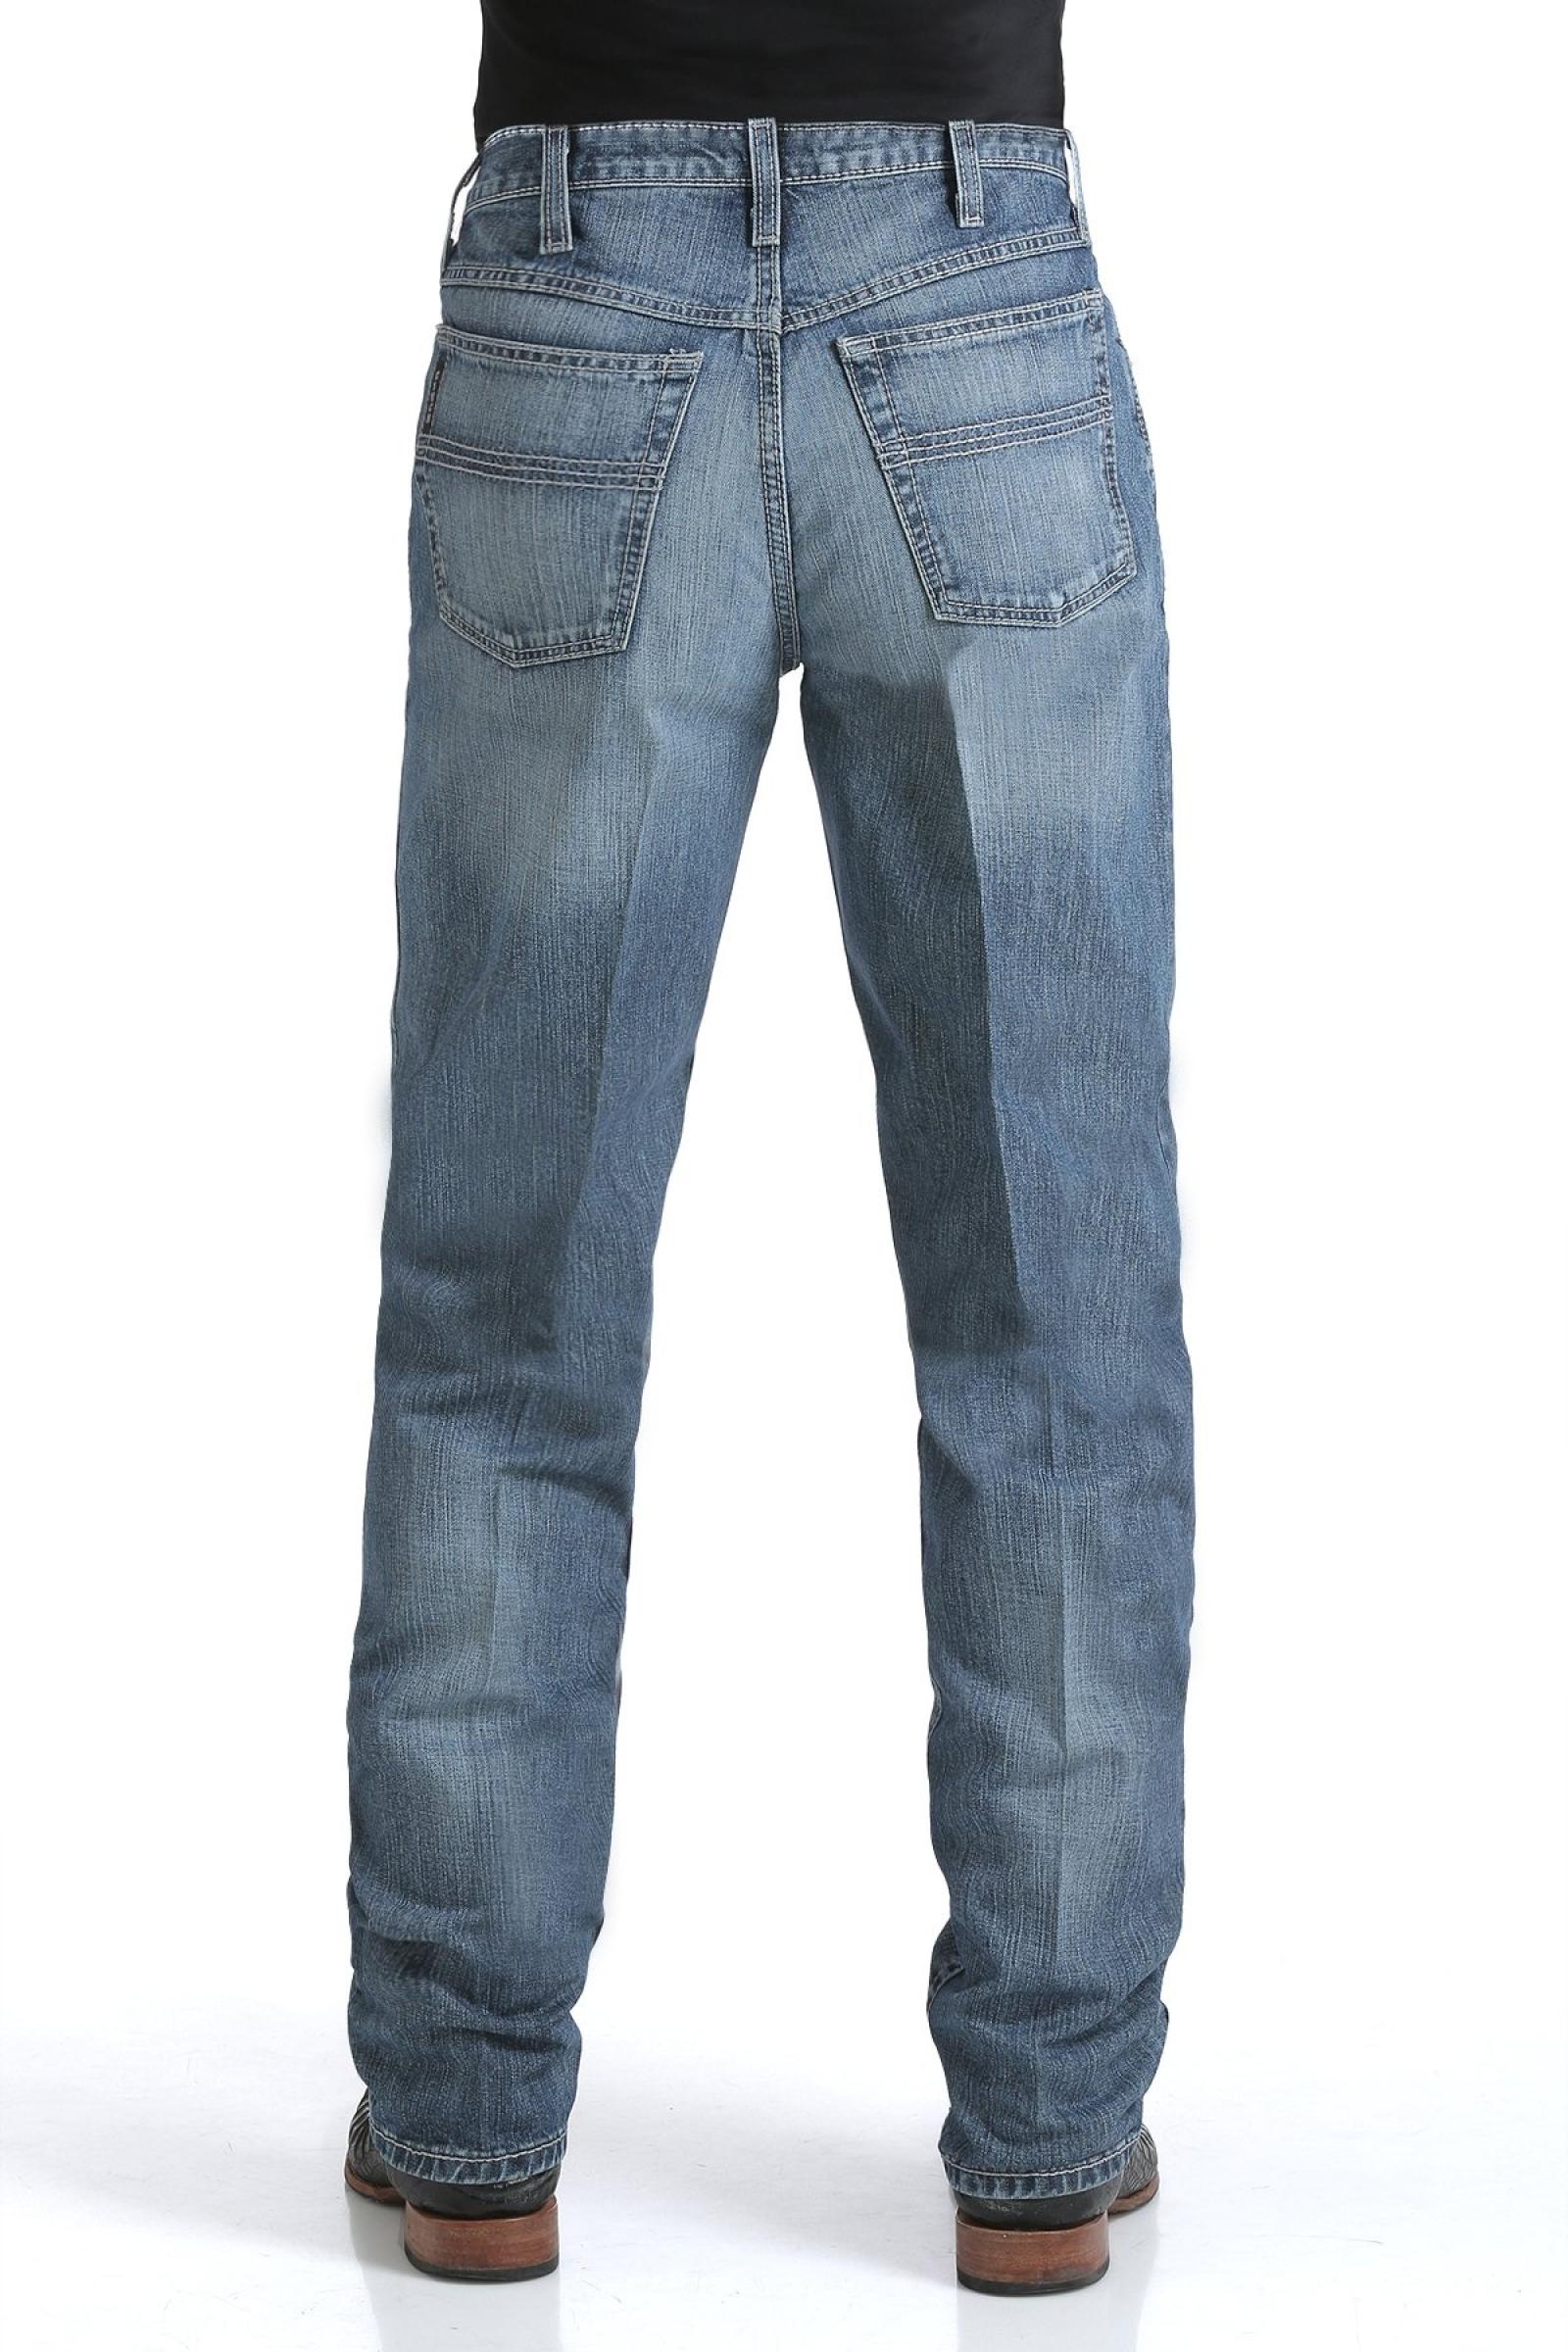 Cinch Men's Loose Fit Black Label 2.0 Jeans